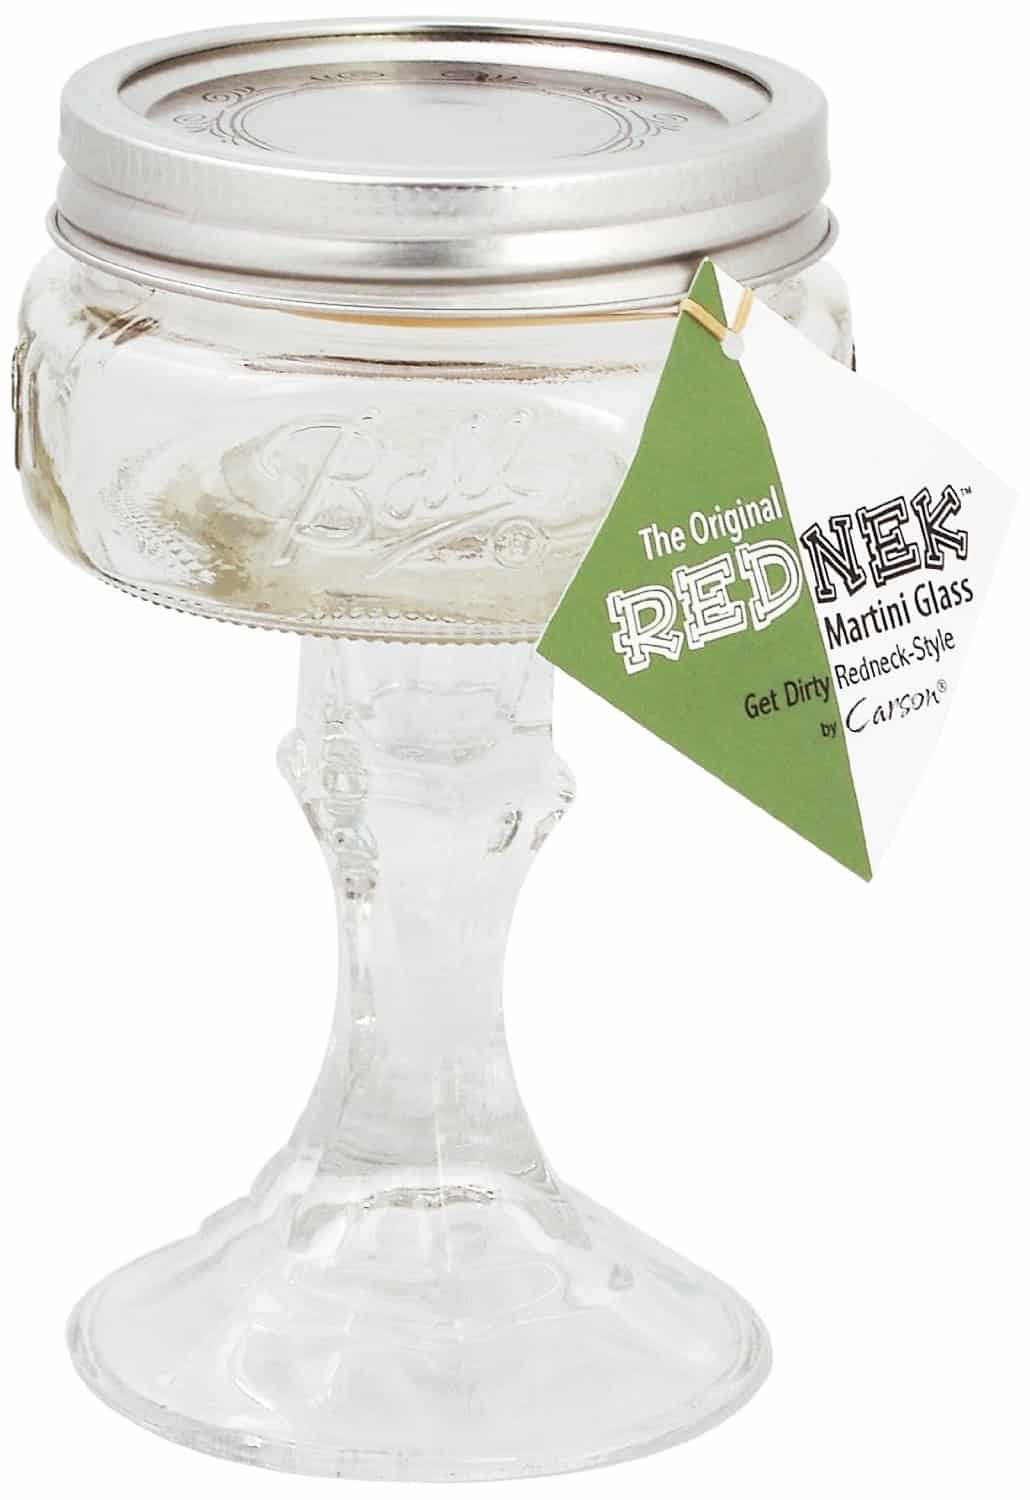 The Original Rednek Tini Glass with Tag